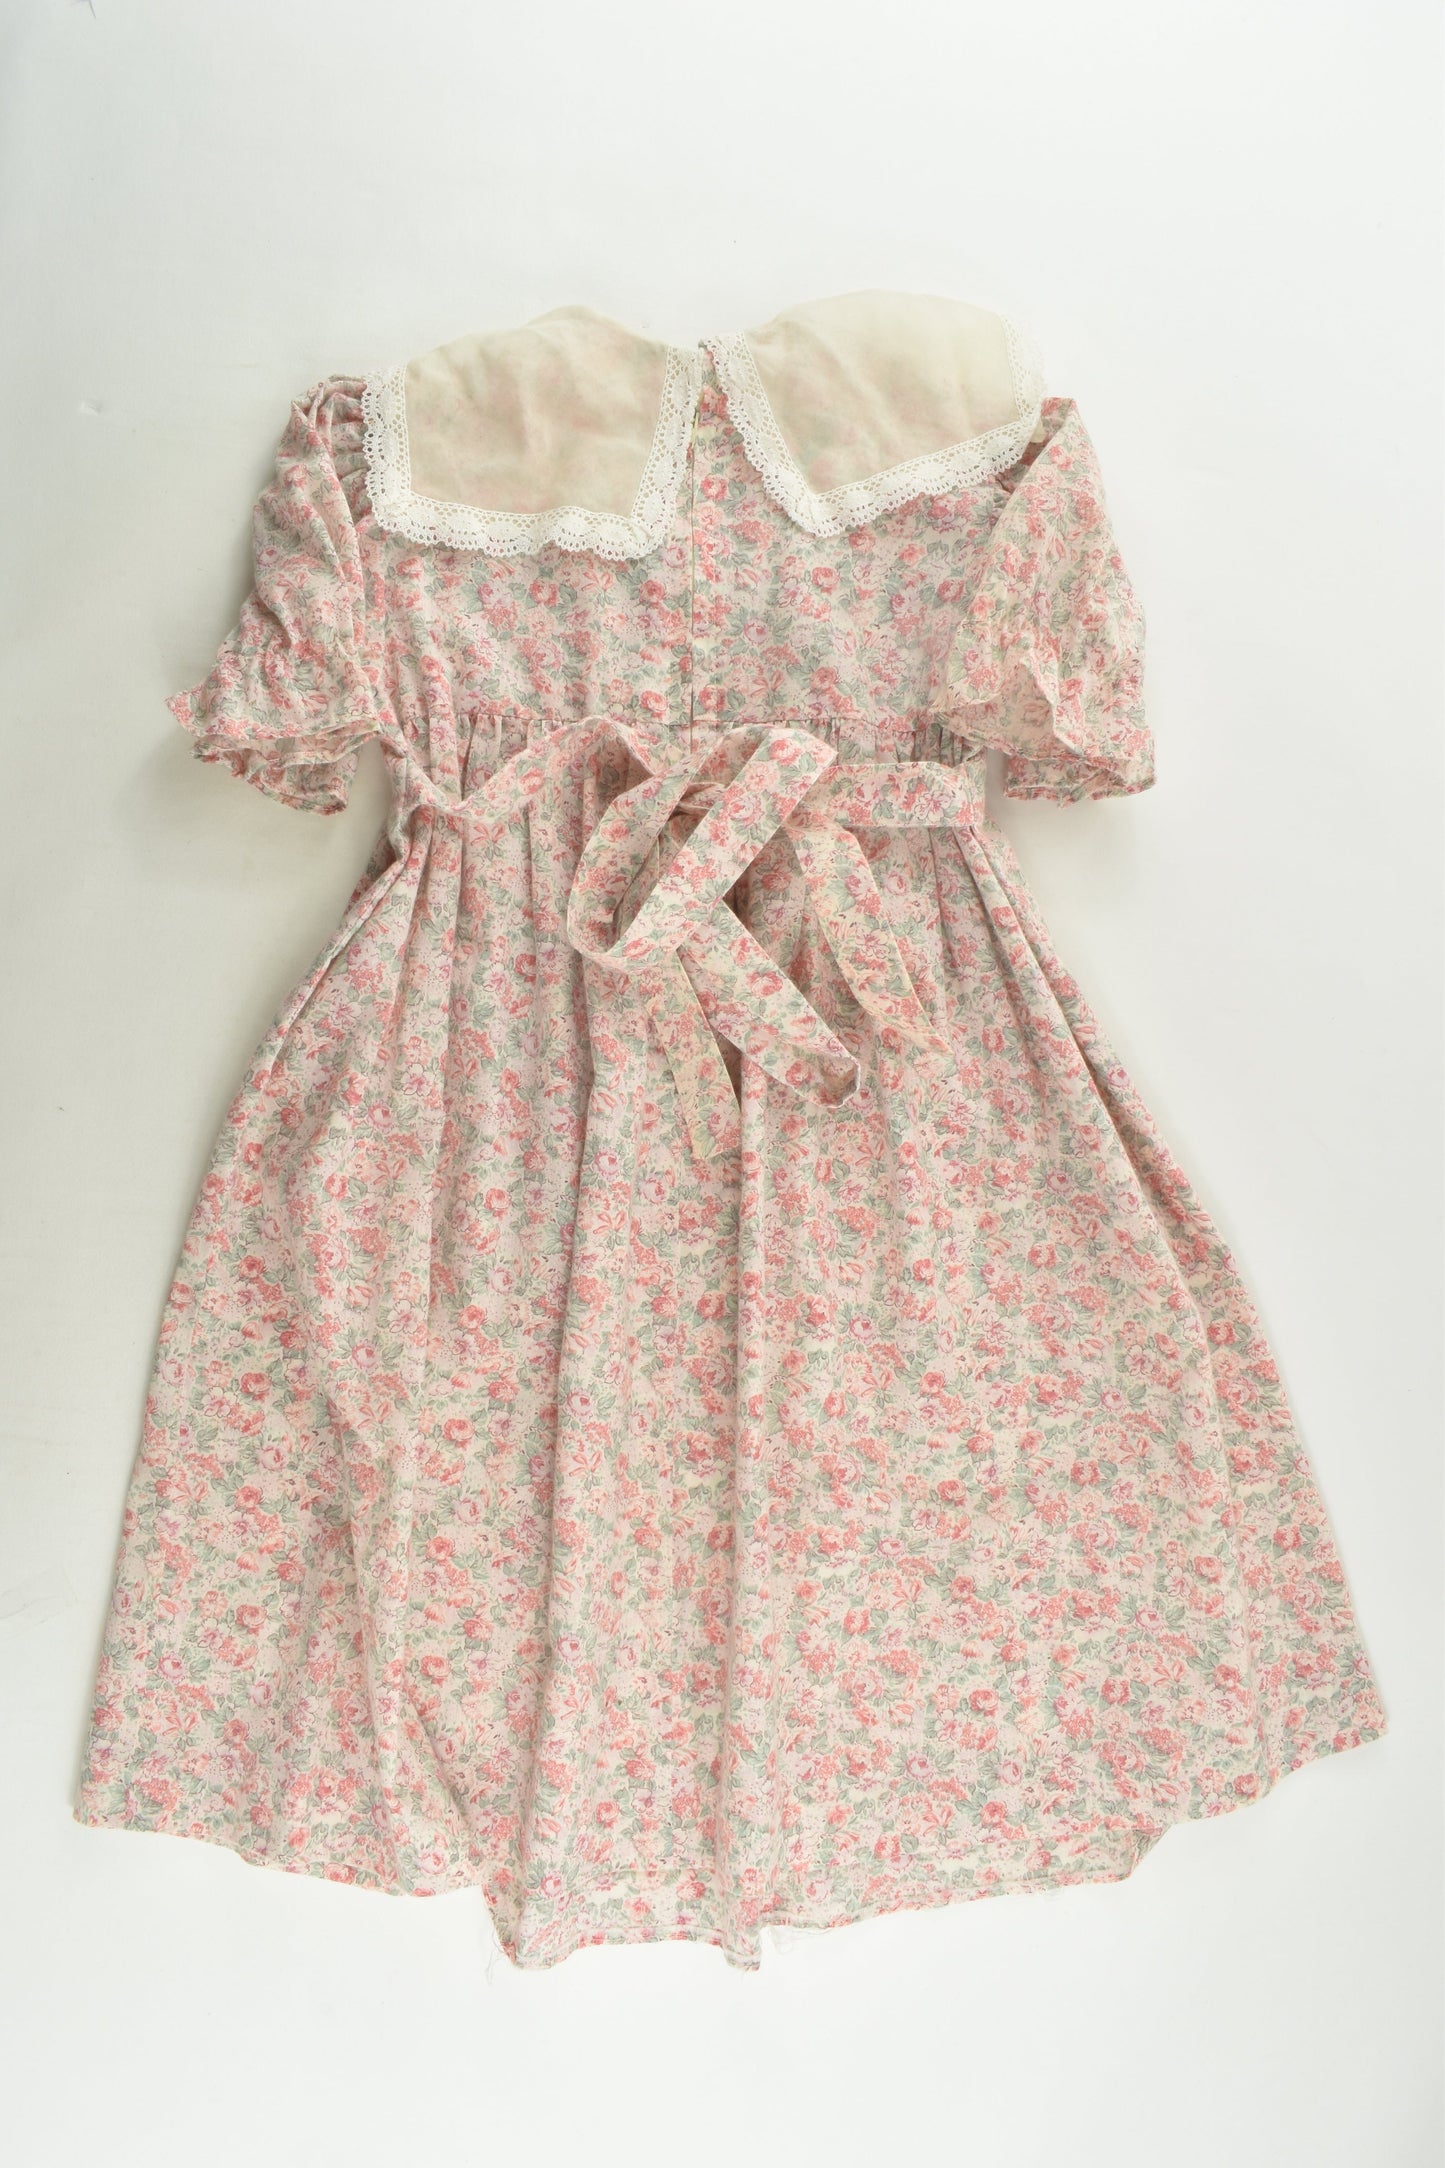 Handmade Size approx 6 Vintage Smocked Dress